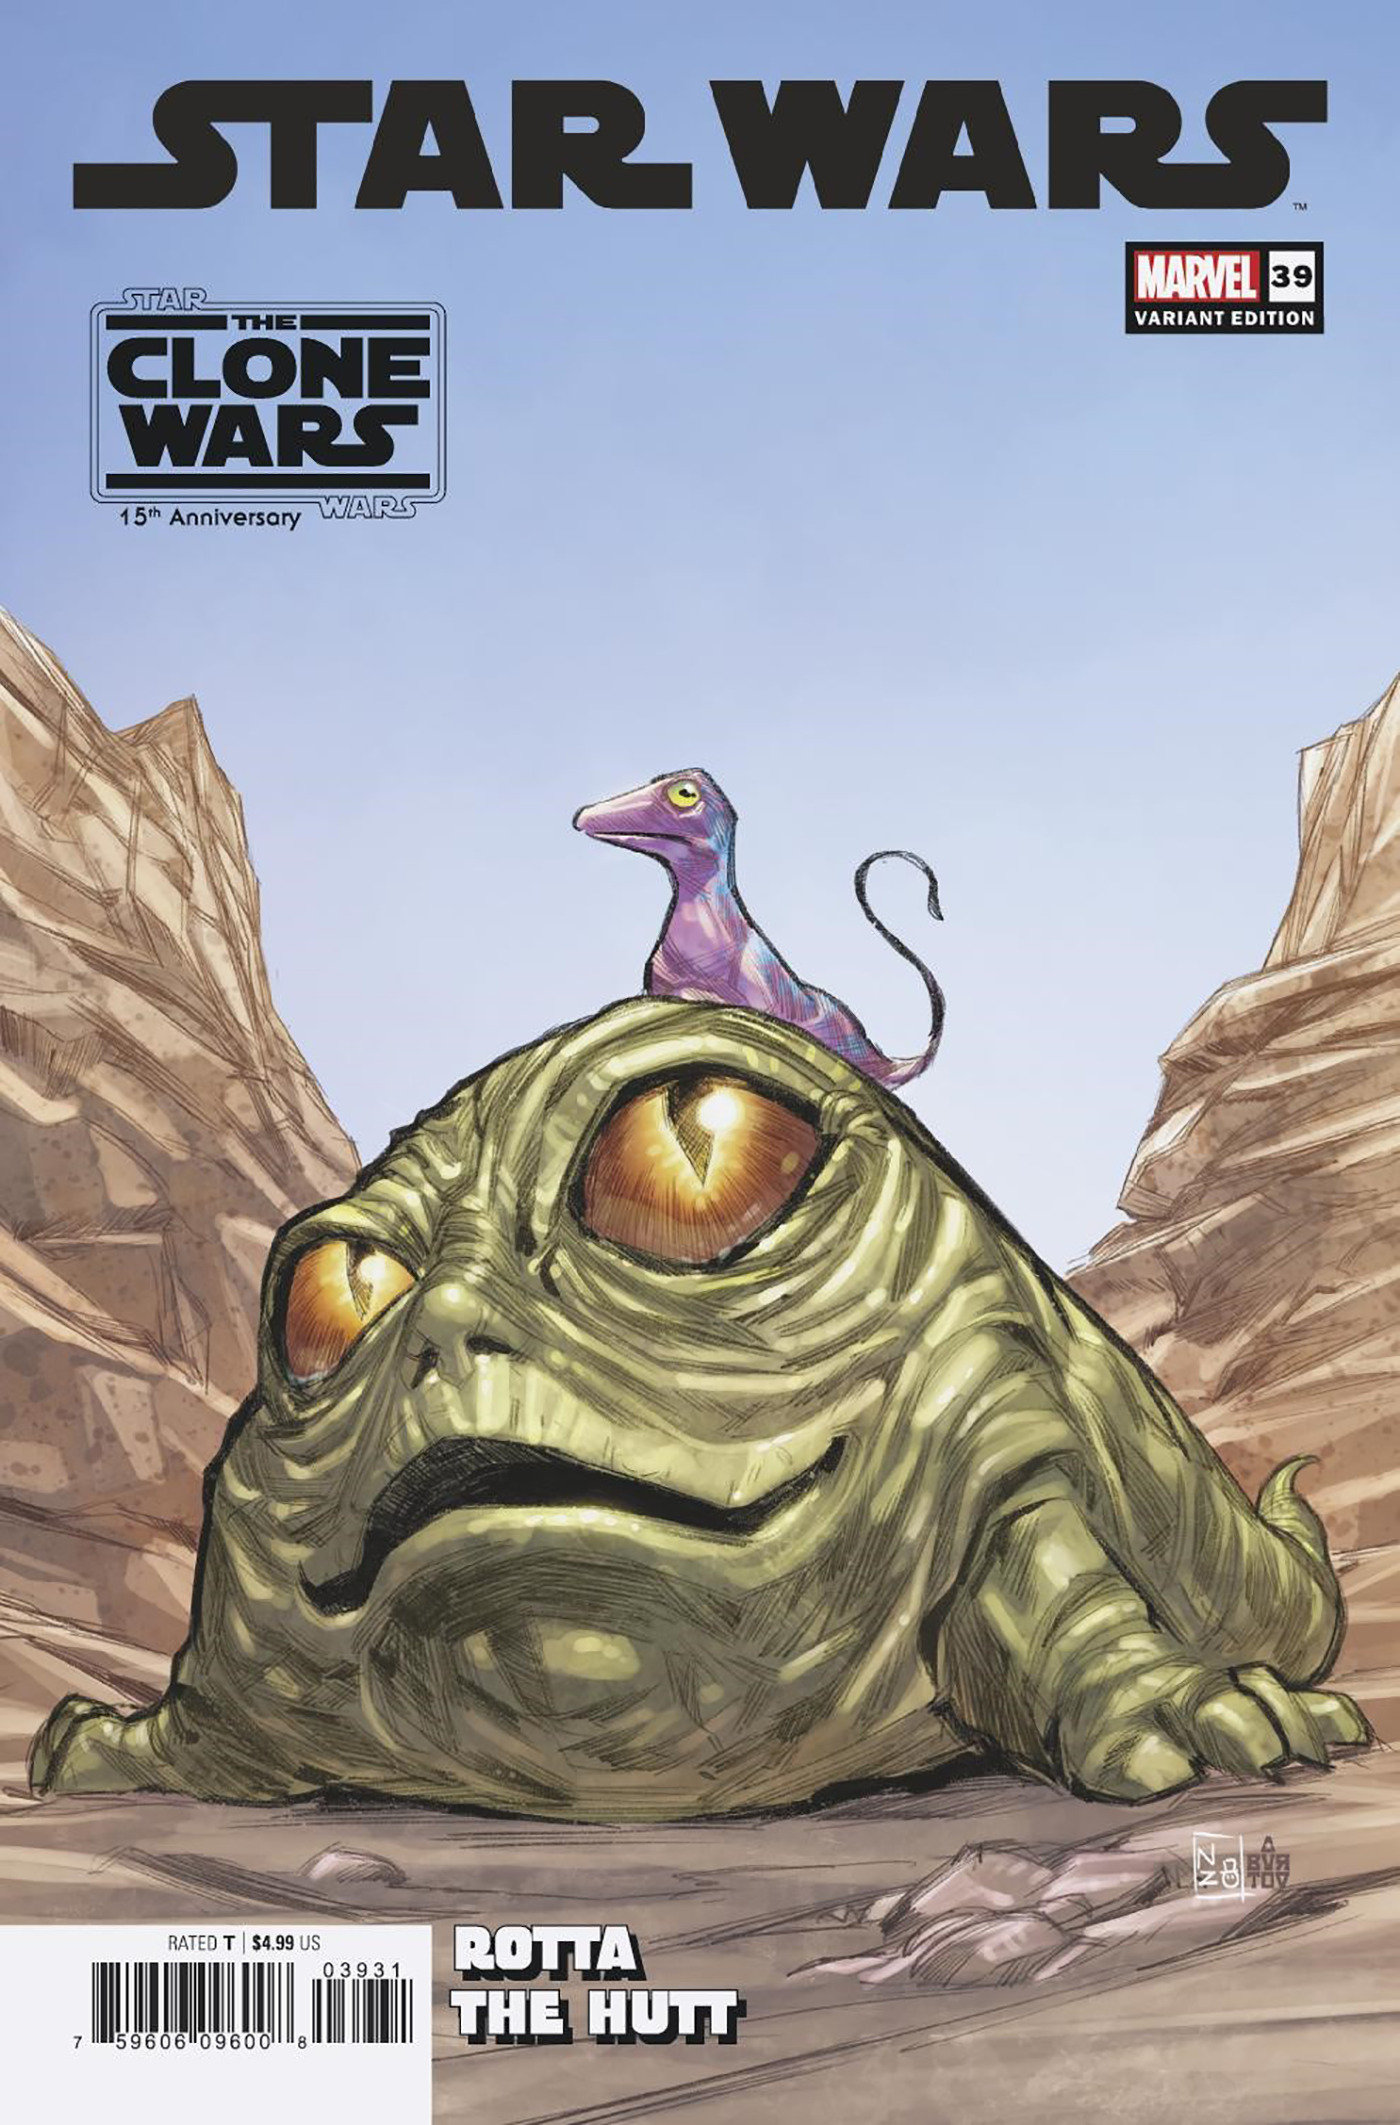 Star Wars #39 (Nabetse Zitro "Rotta the Hutt" The Clone Wars 15th Anniversary Variant Cover) (18.10.2023)